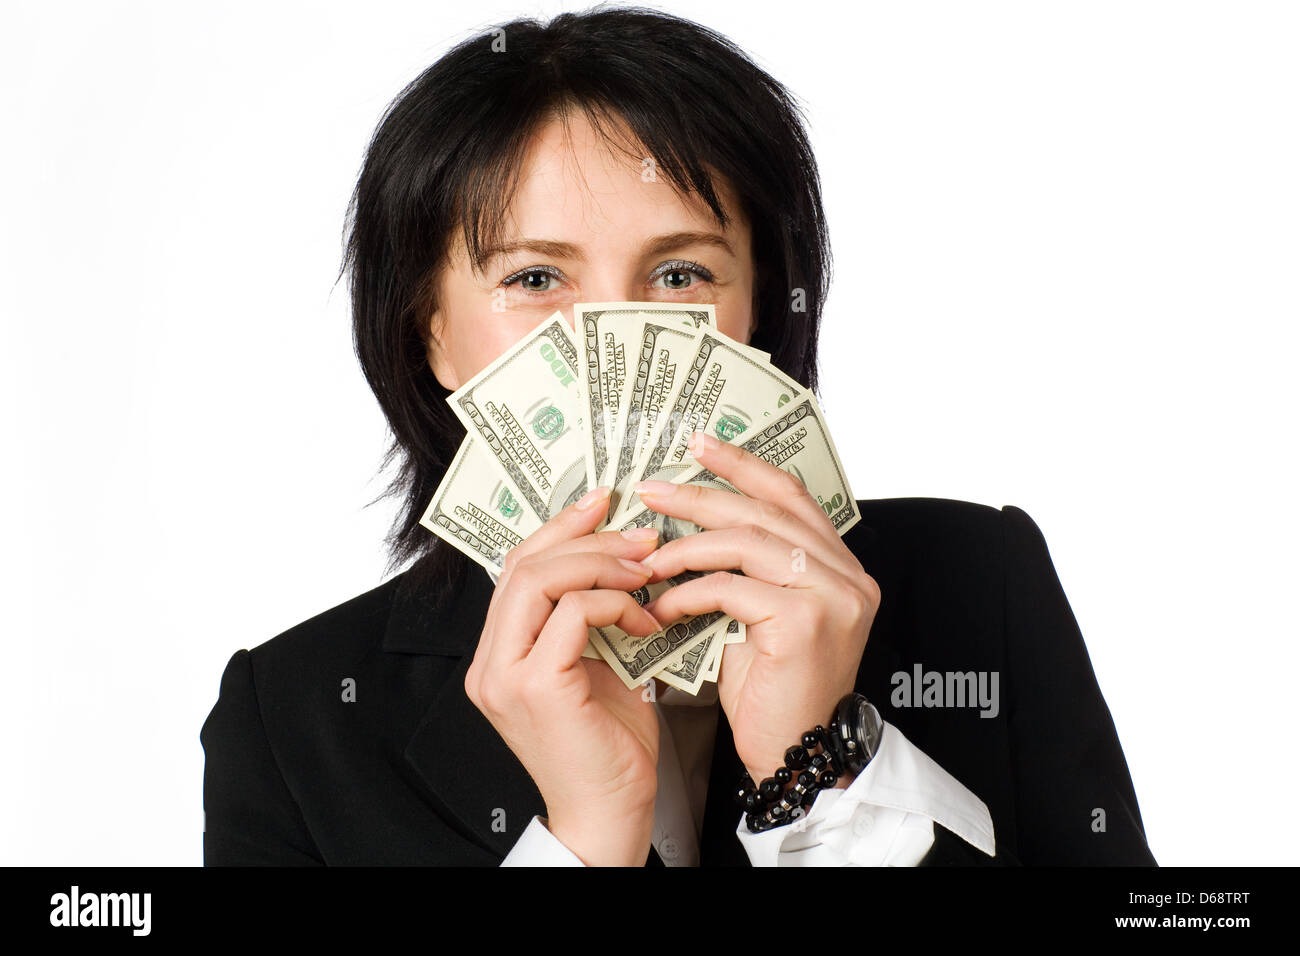 Woman with money. Big winner. Stock Photo